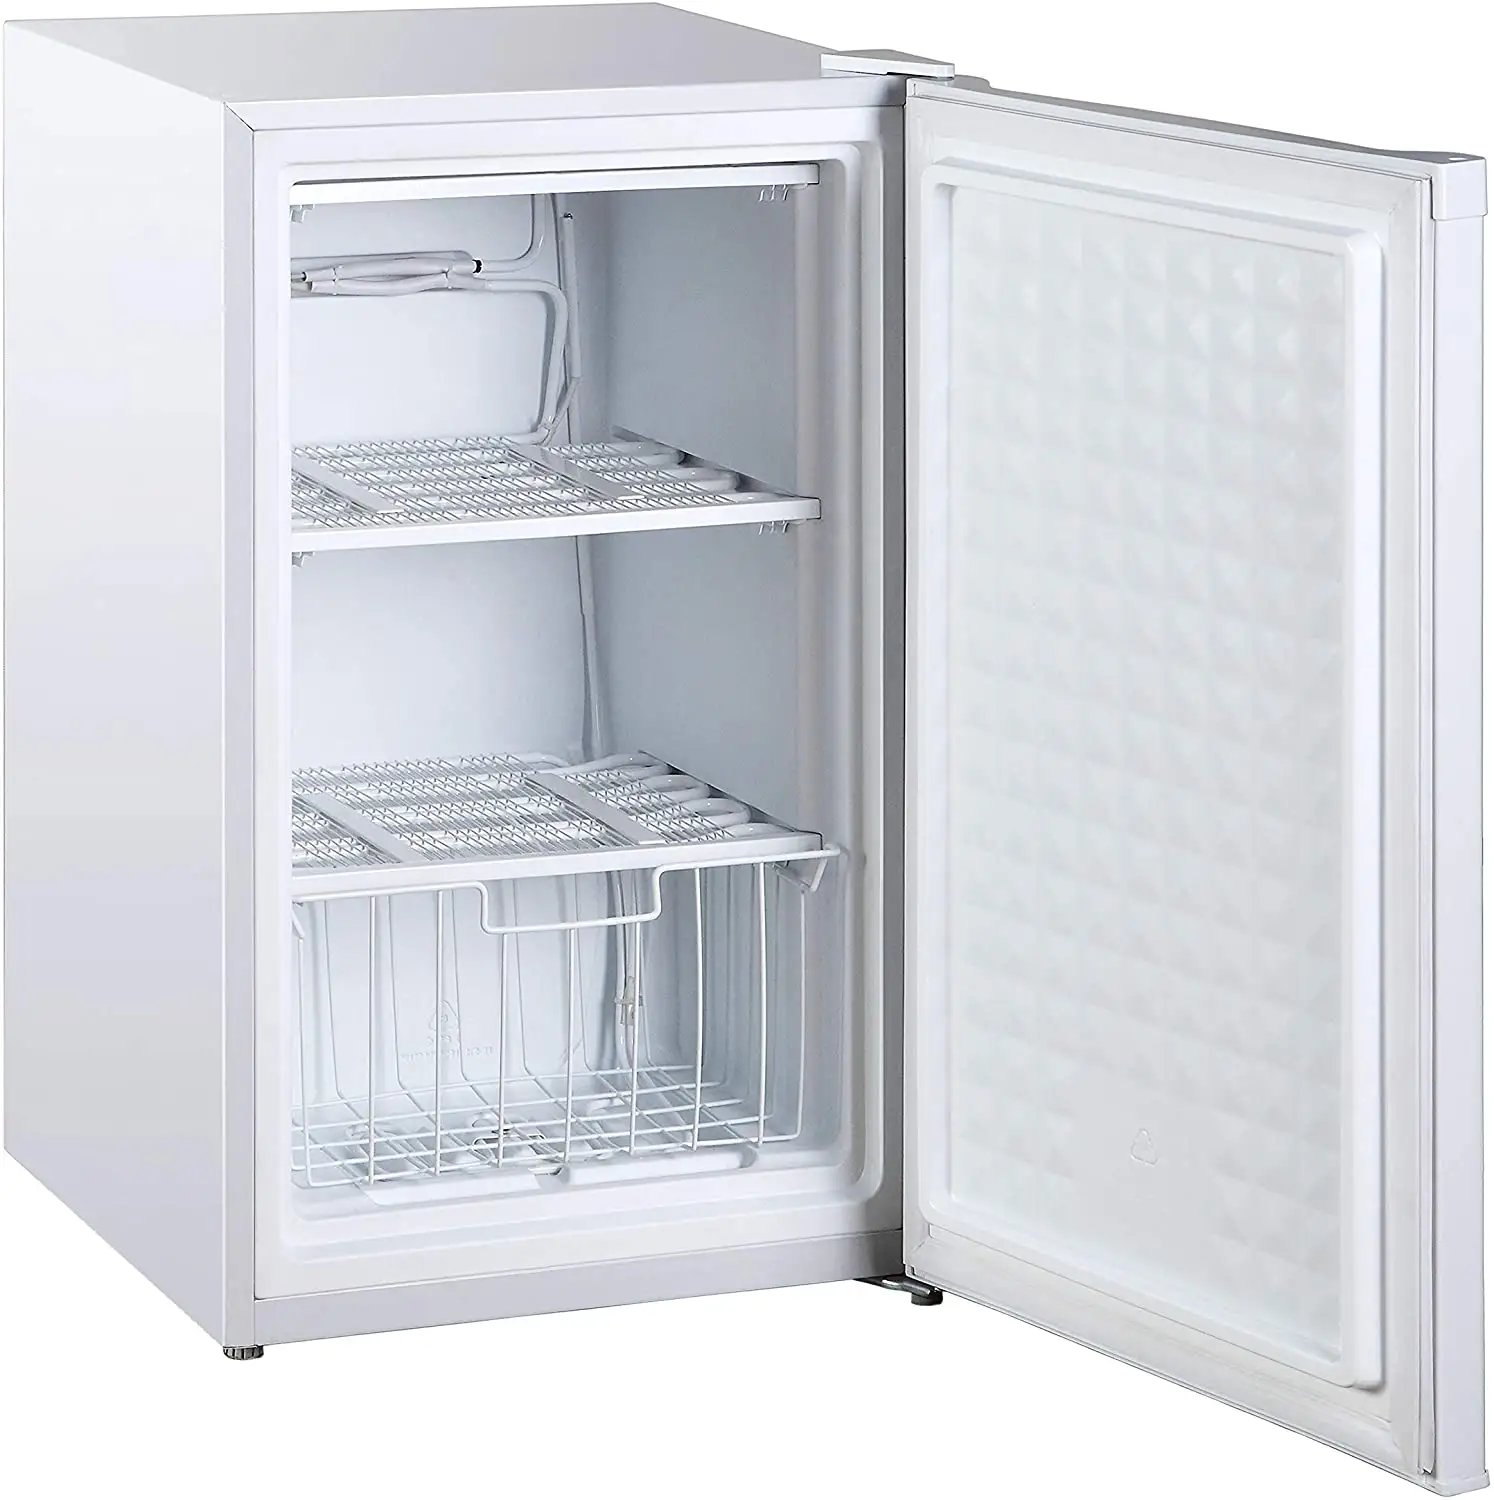 Mini congelador vertical para uso en el hogar